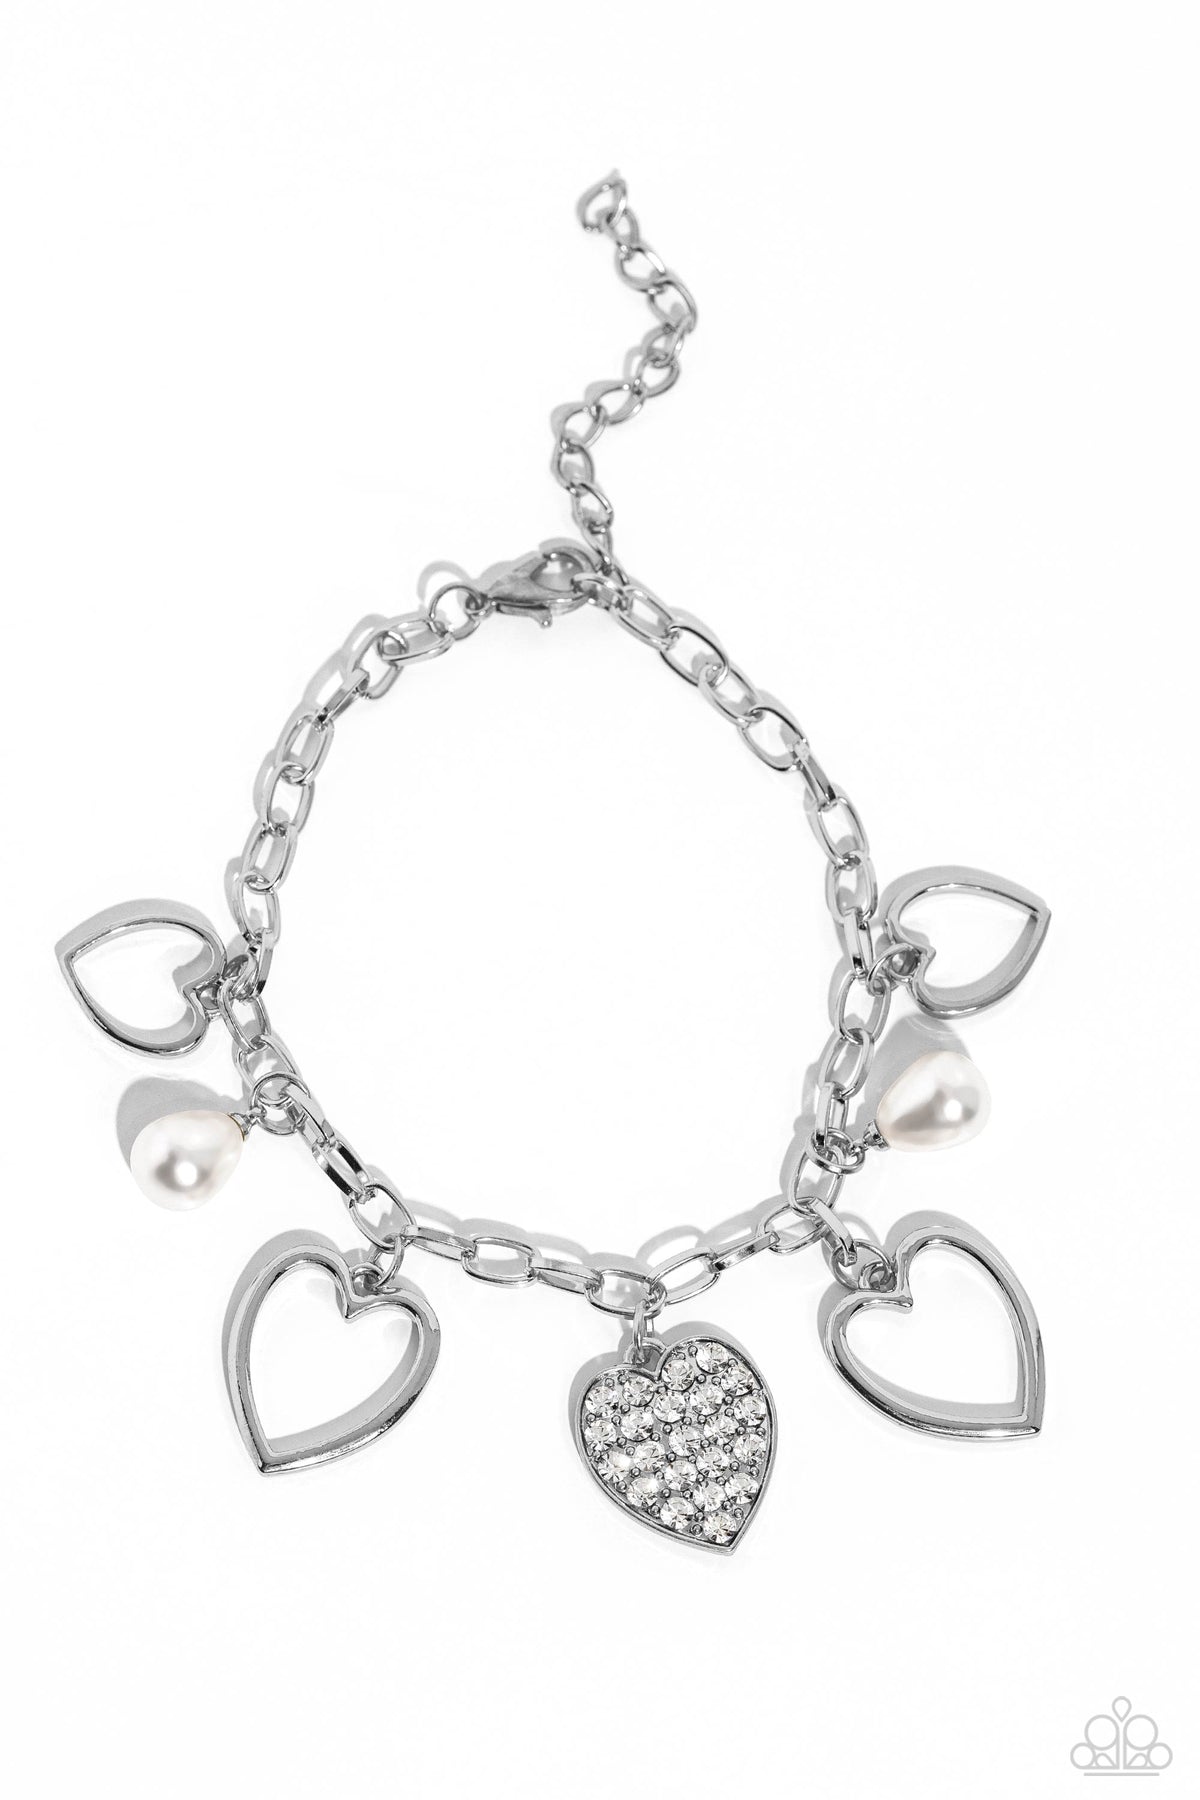 GLOW Your Heart White Bracelet - Paparazzi Accessories- lightbox - CarasShop.com - $5 Jewelry by Cara Jewels